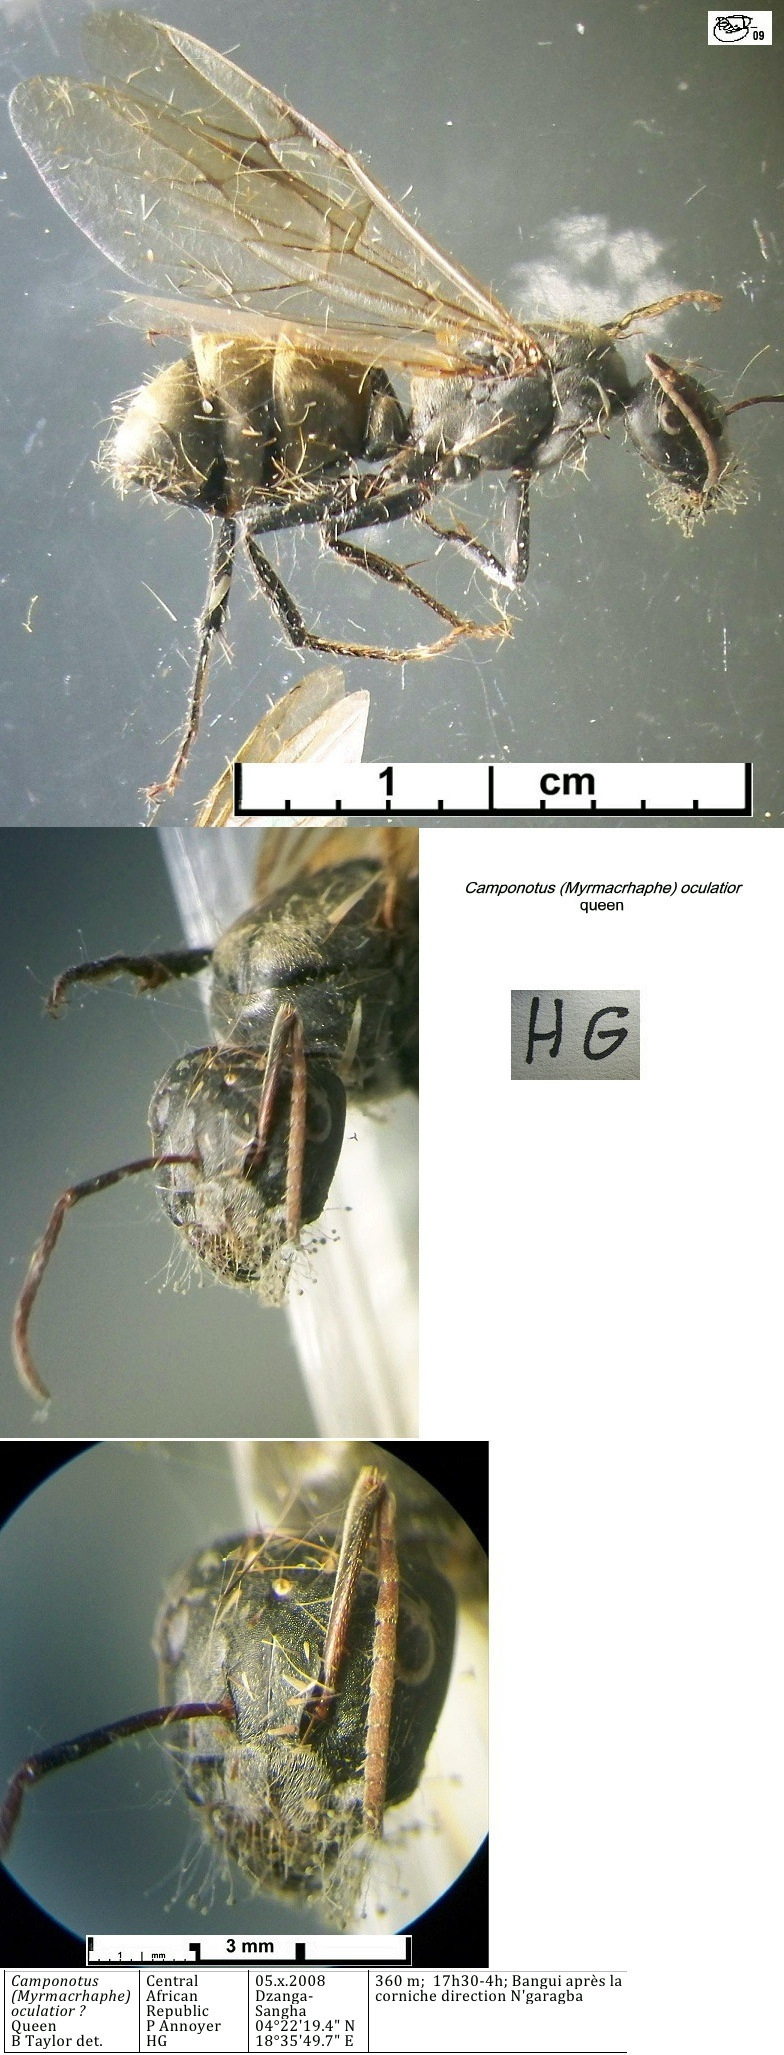 {Camponotus oculatior queen